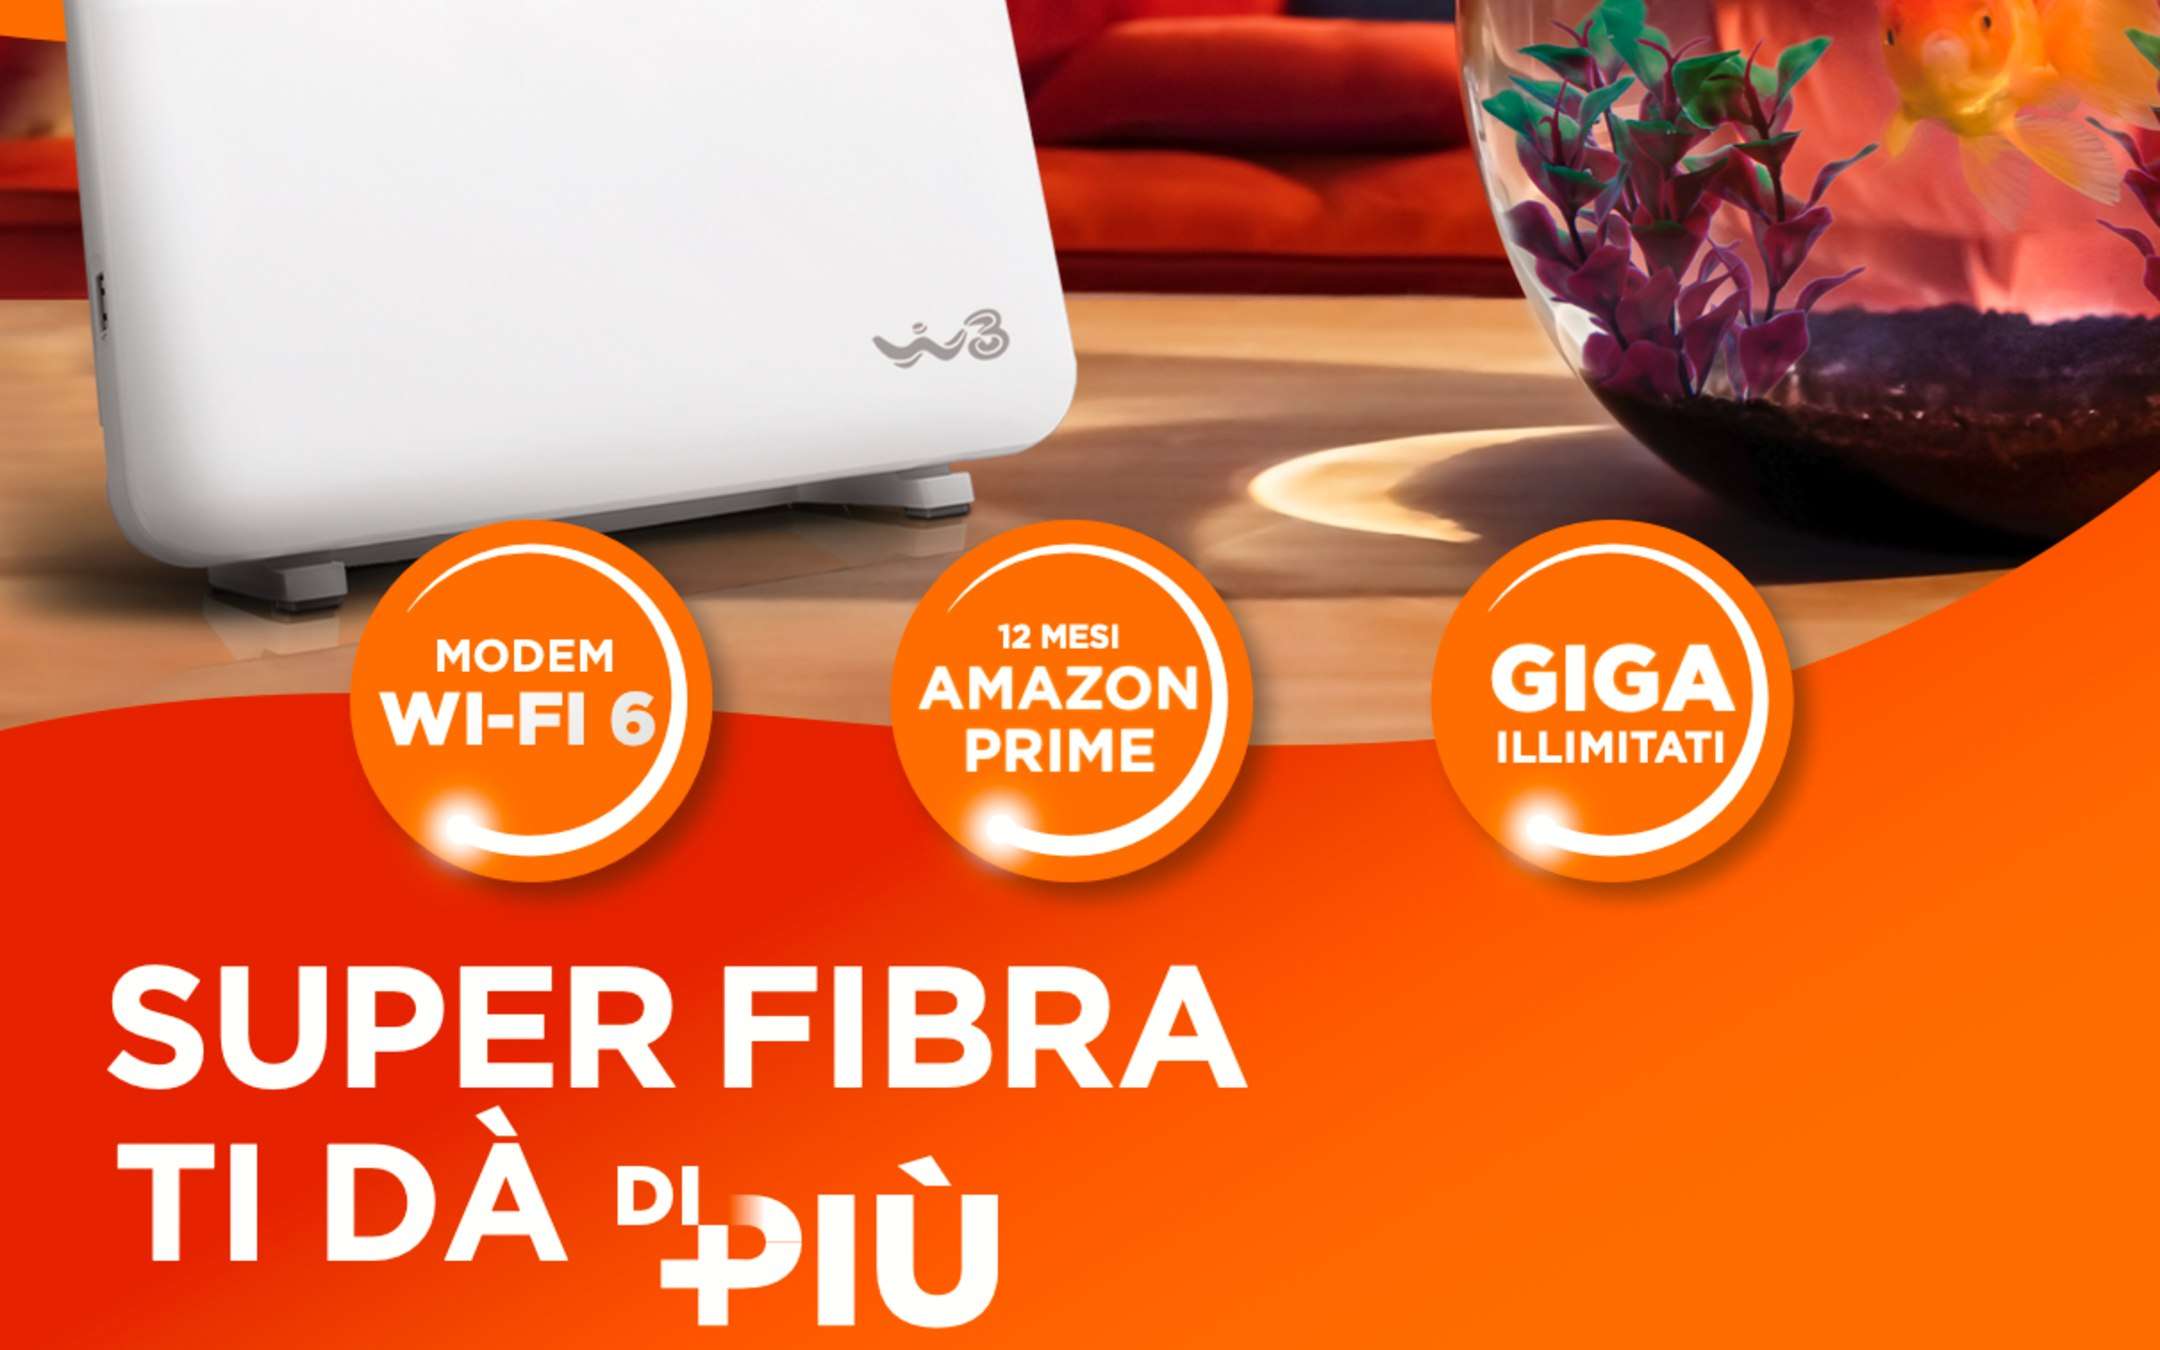 Super Fibra WINDTRE: Promo Speciale a 24,99€